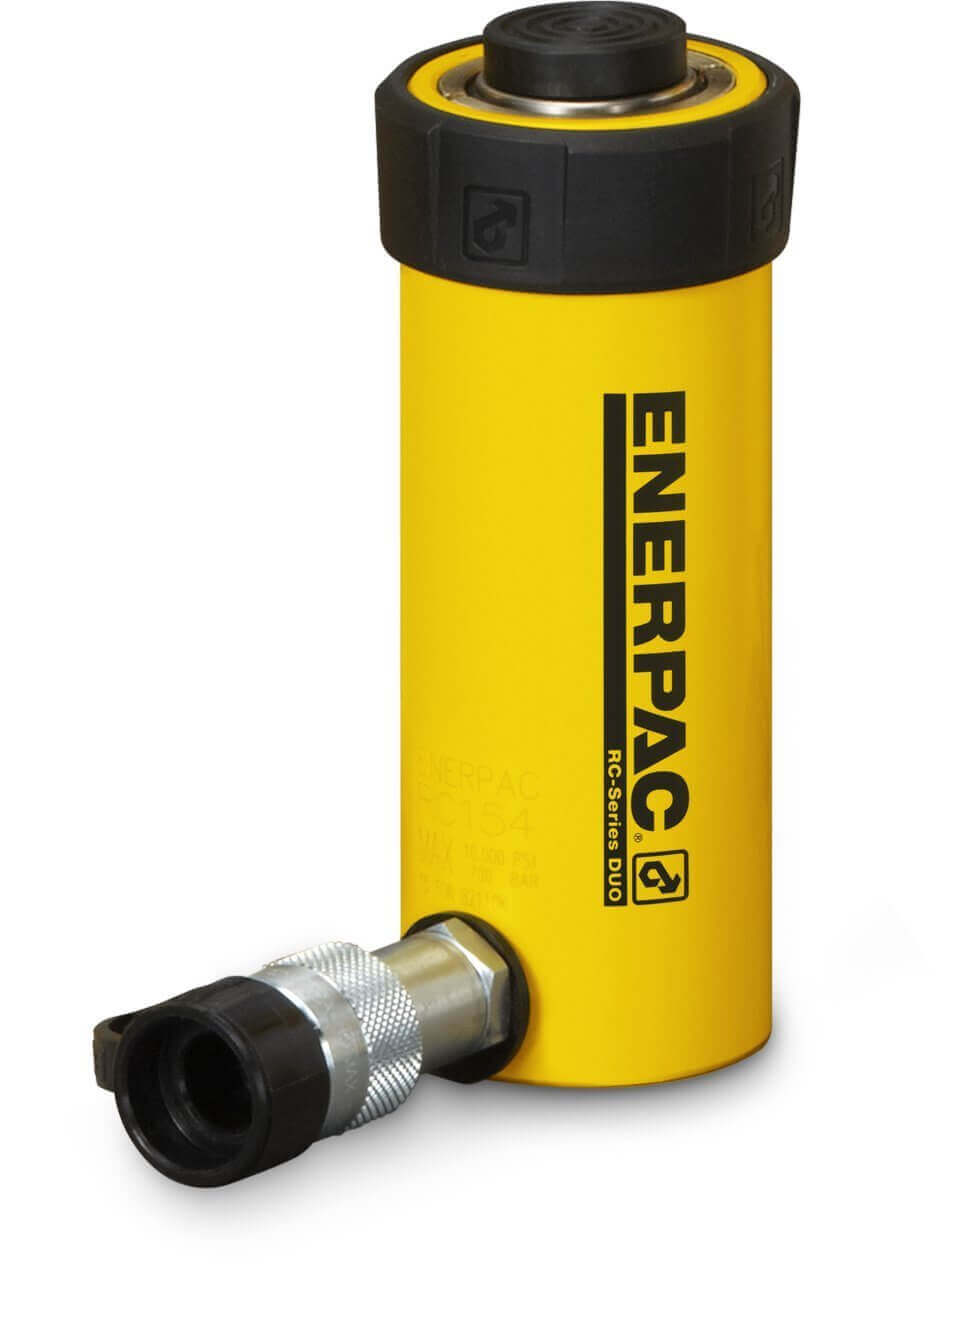 Enerpac 11.2 Ton General Purpose Cylinder, 2.13" Stroke